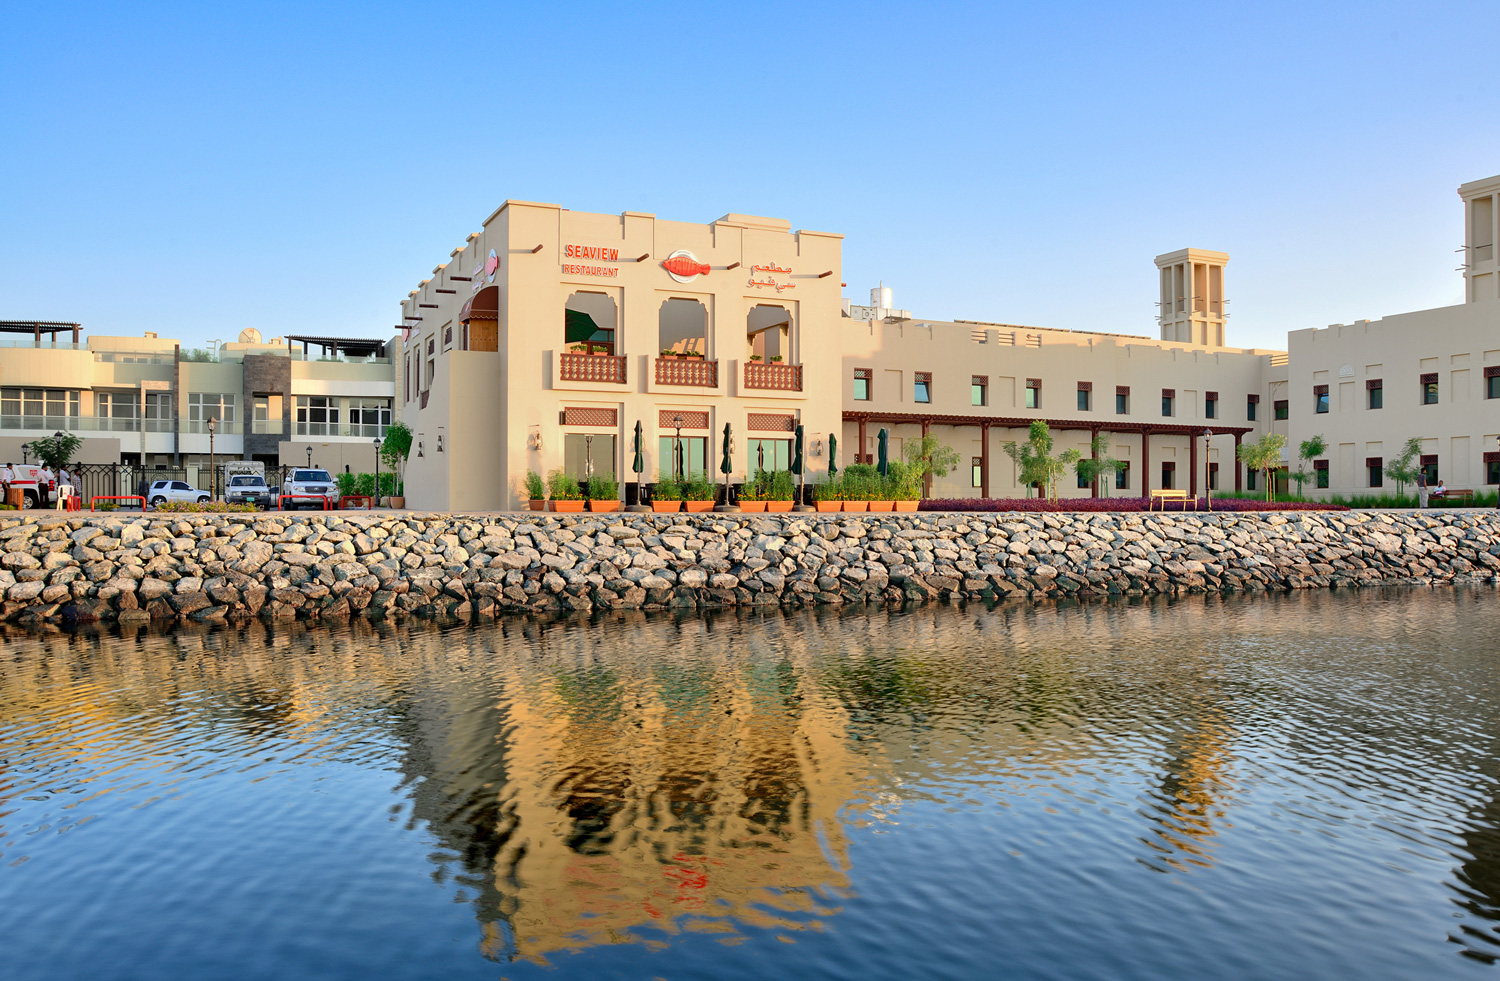  Seaview Seafood Restaurants in Dubai